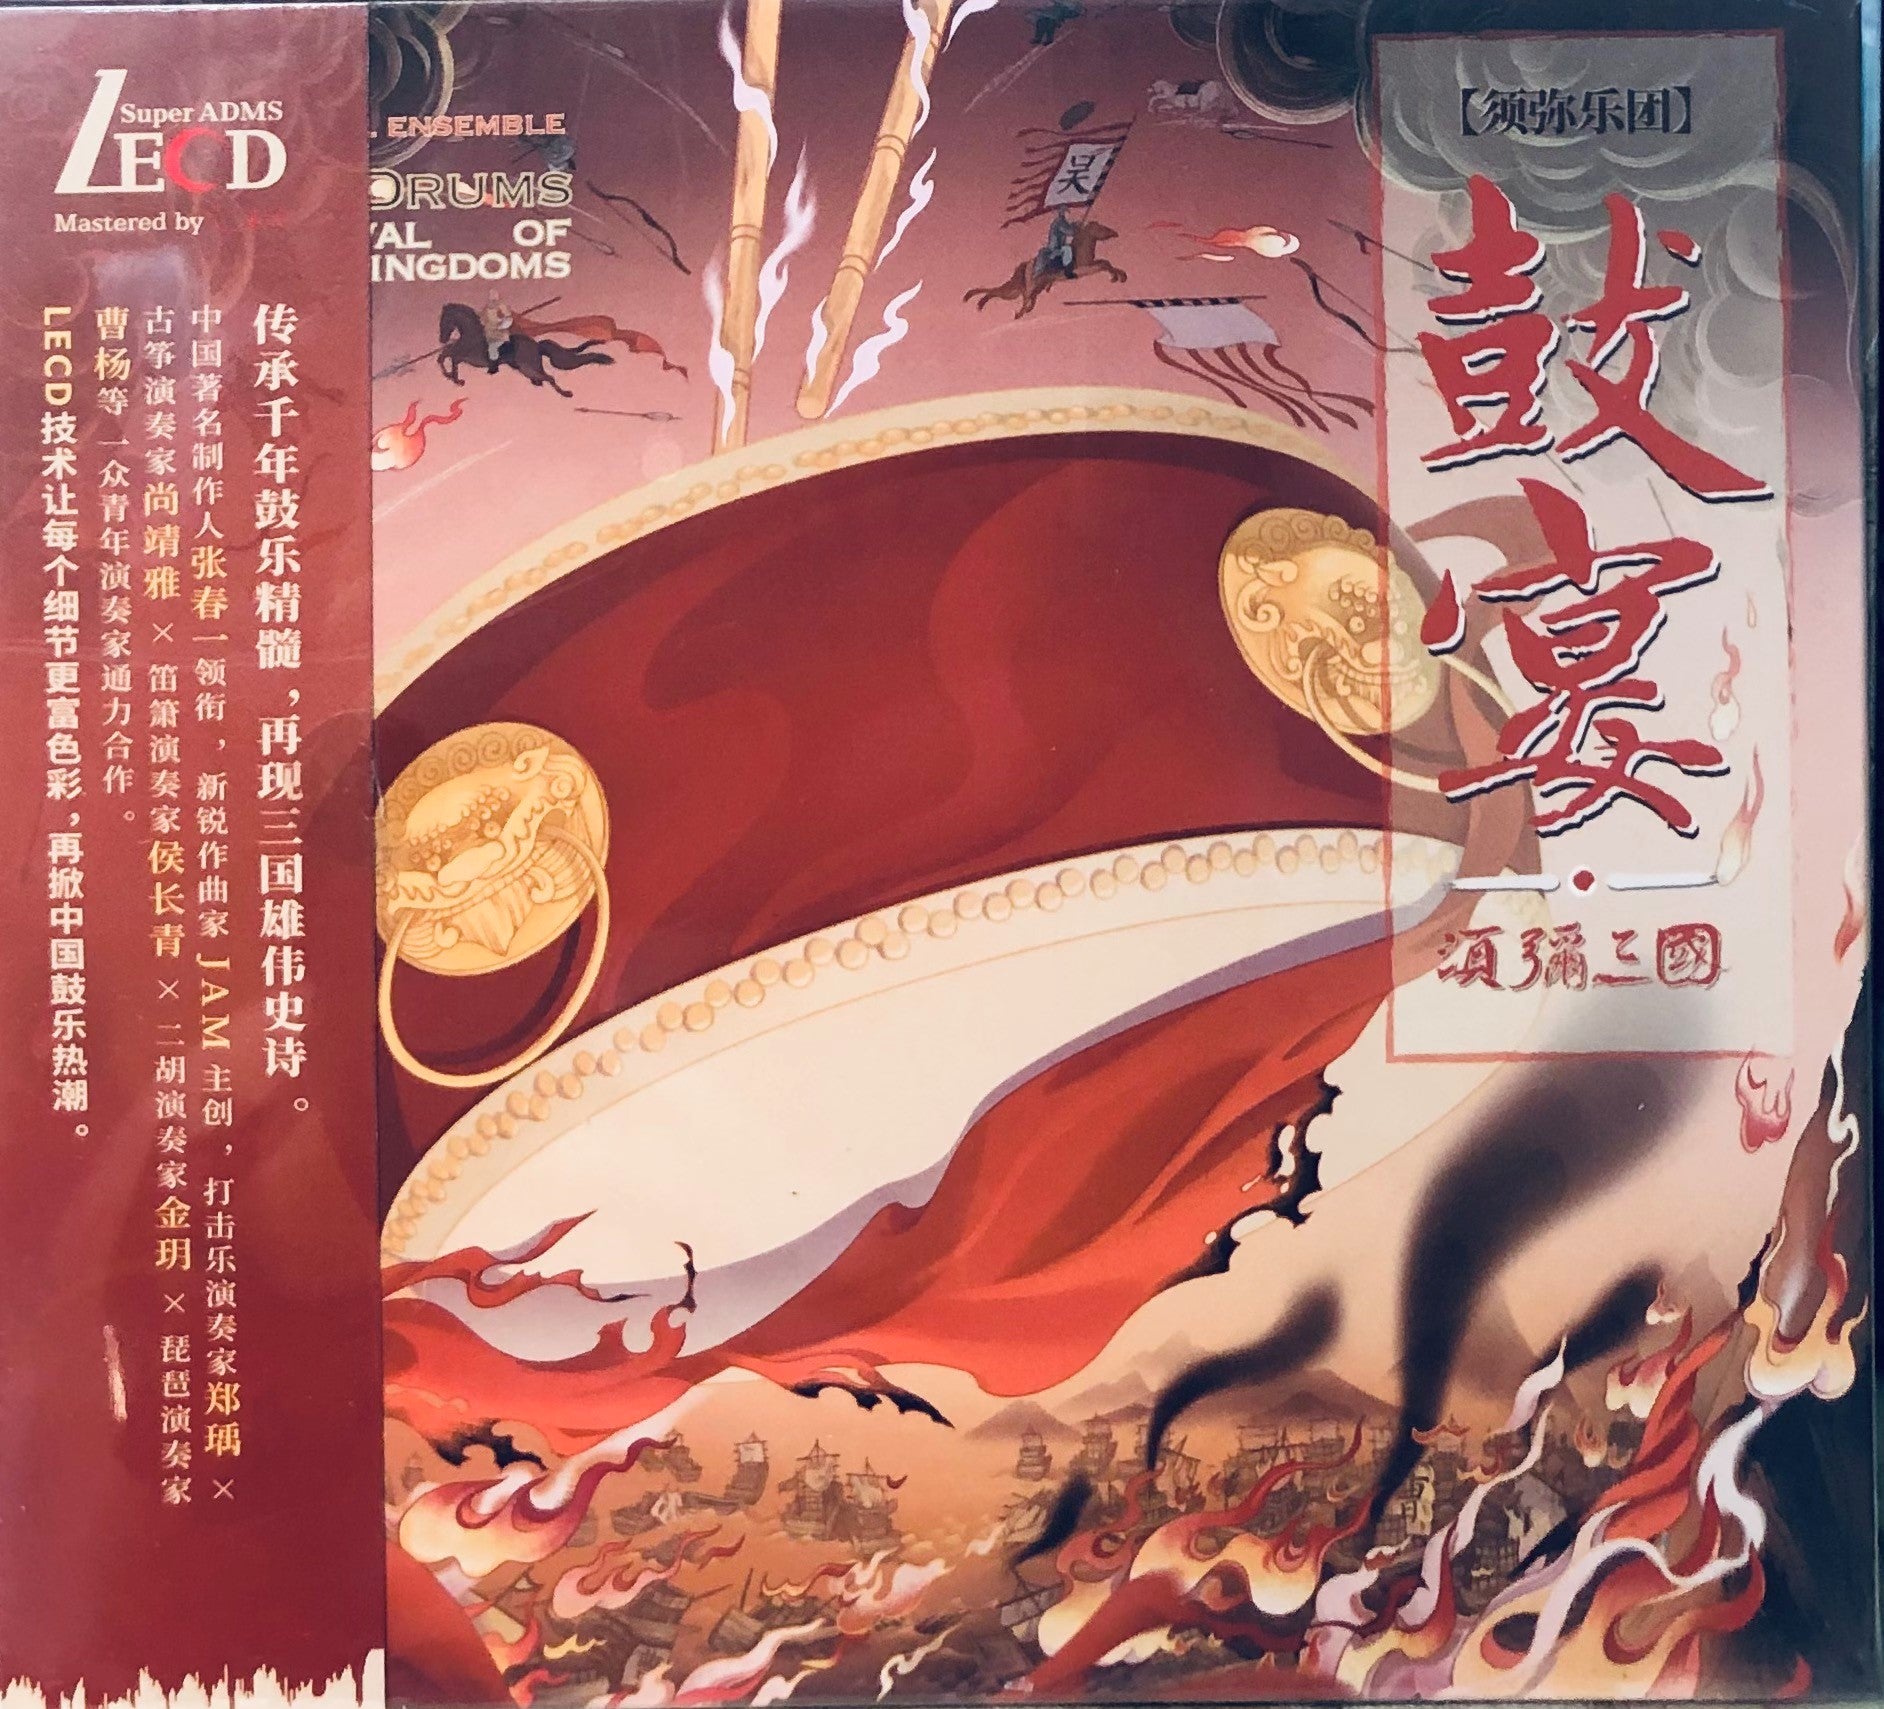 CHINESE DRUMS A REVIVAL OF THREE KINGDOMS - 鼓宴·須彌三國 LECD (CD)